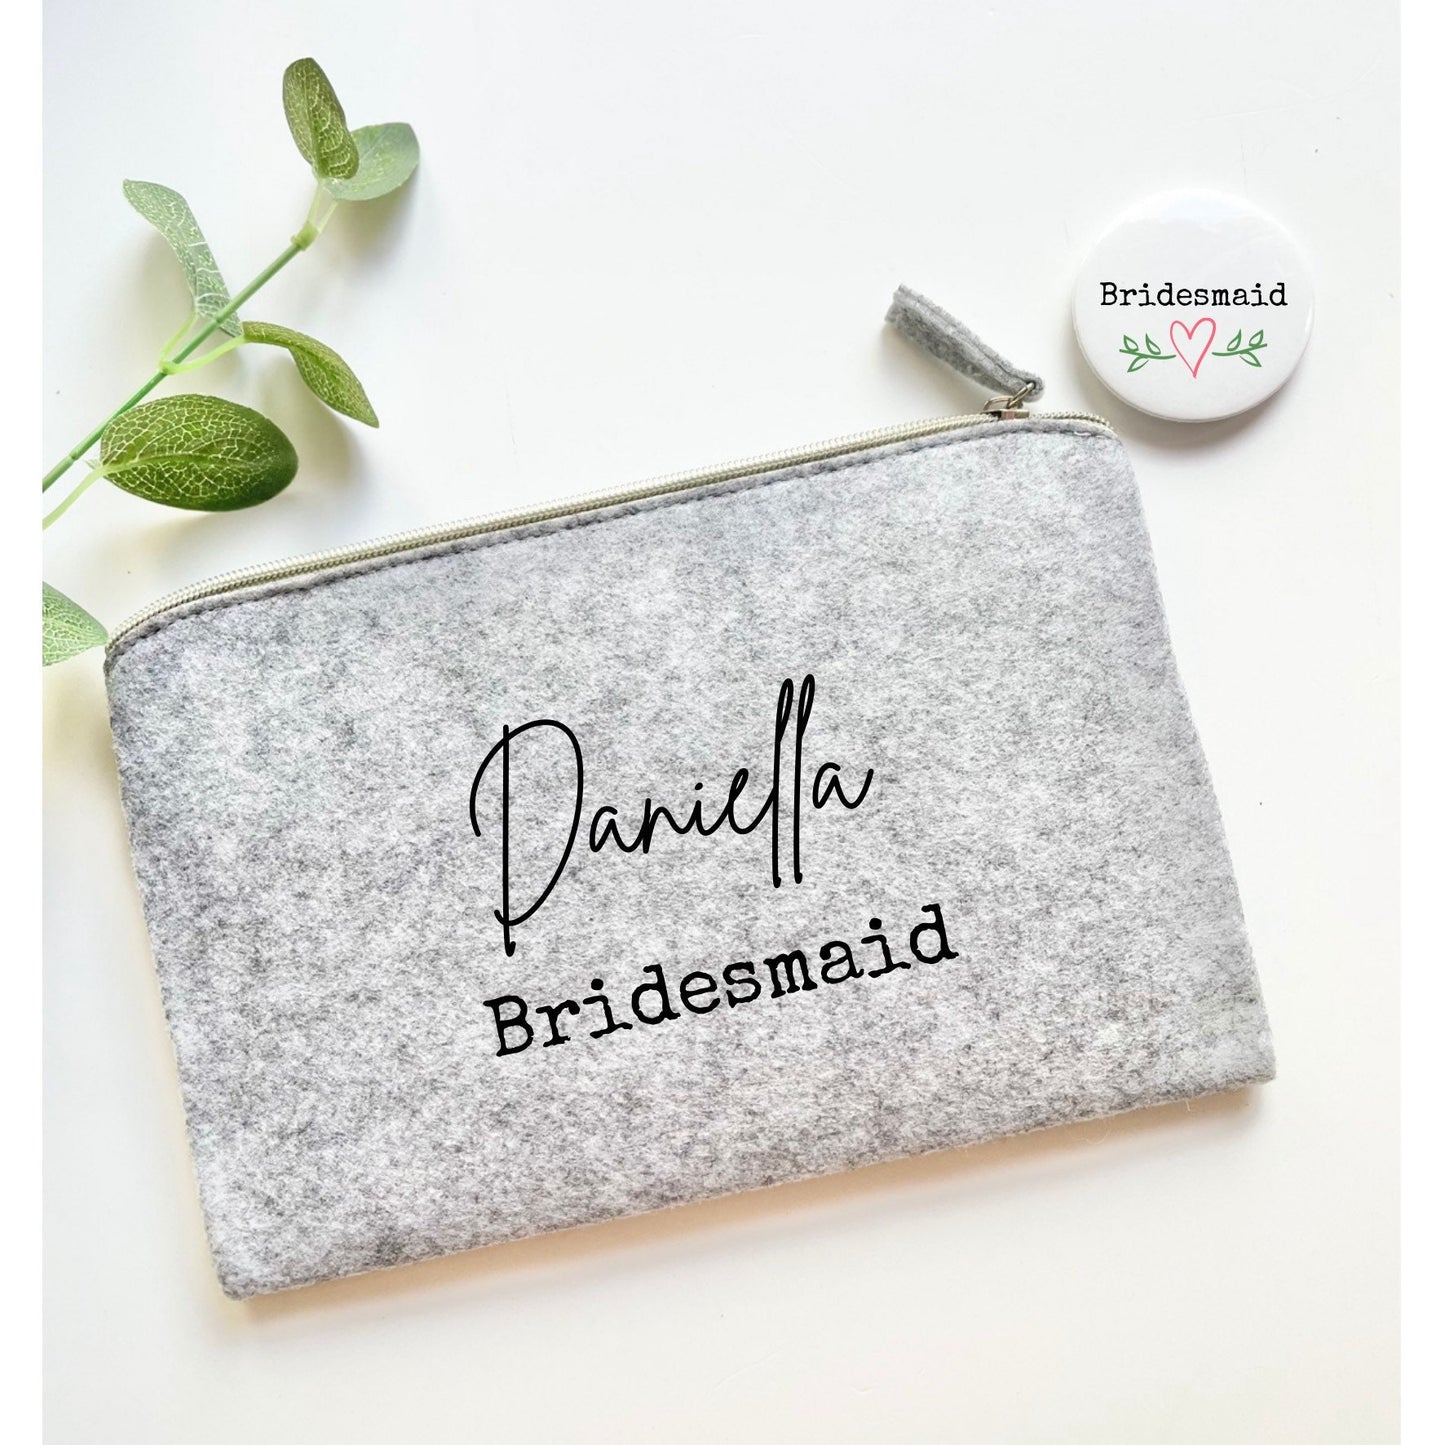 Bridesmaid gift, Personalised grey make up bag and pocket mirror gift set for bridesmaids, bride tribe proposal gifts